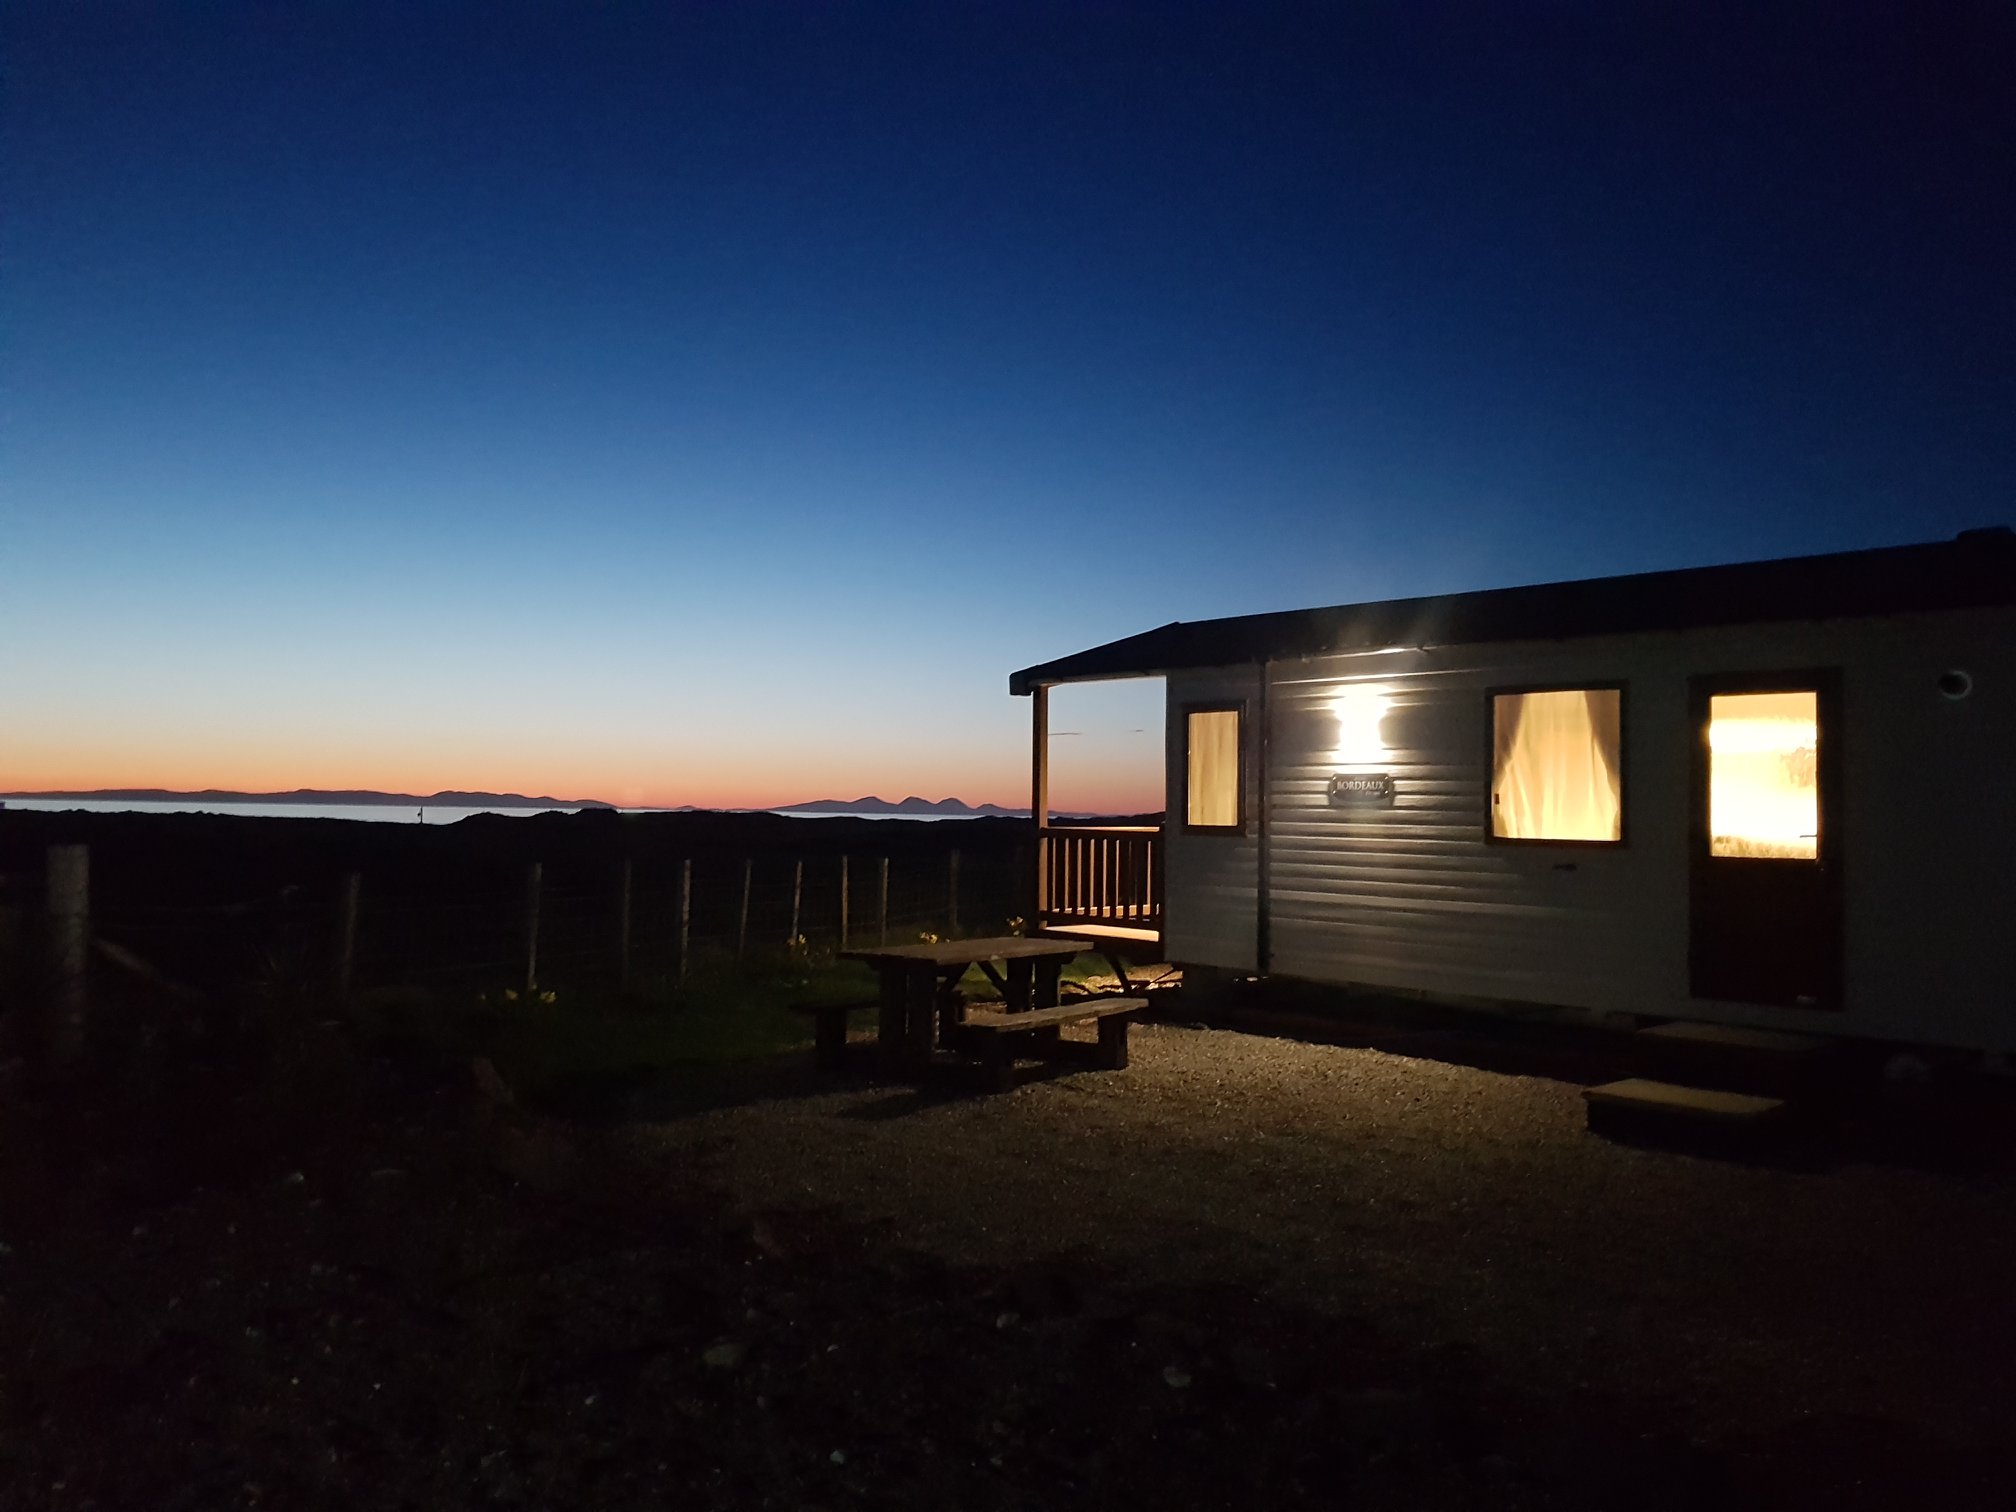 Kintyre sunset at Machrihanish campsite